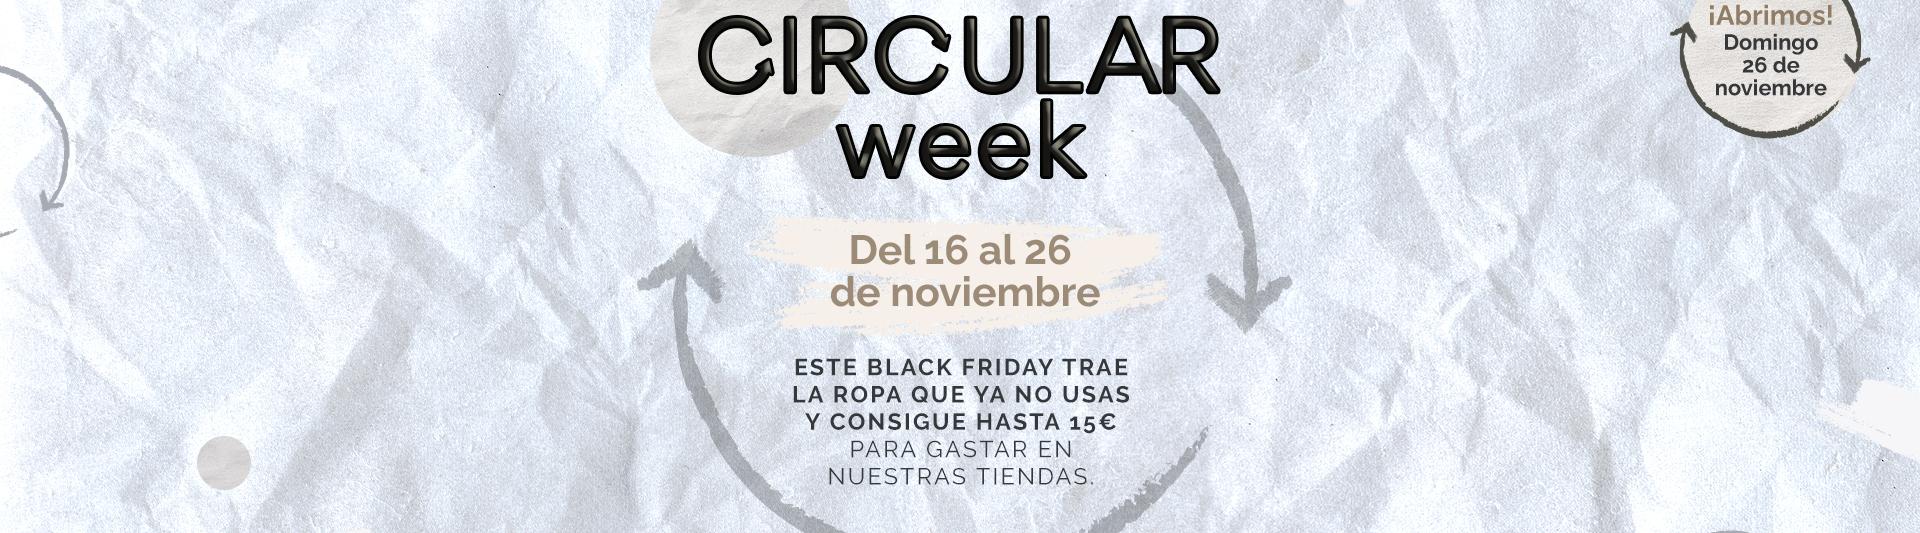 circular-week-frontal_web.jpg